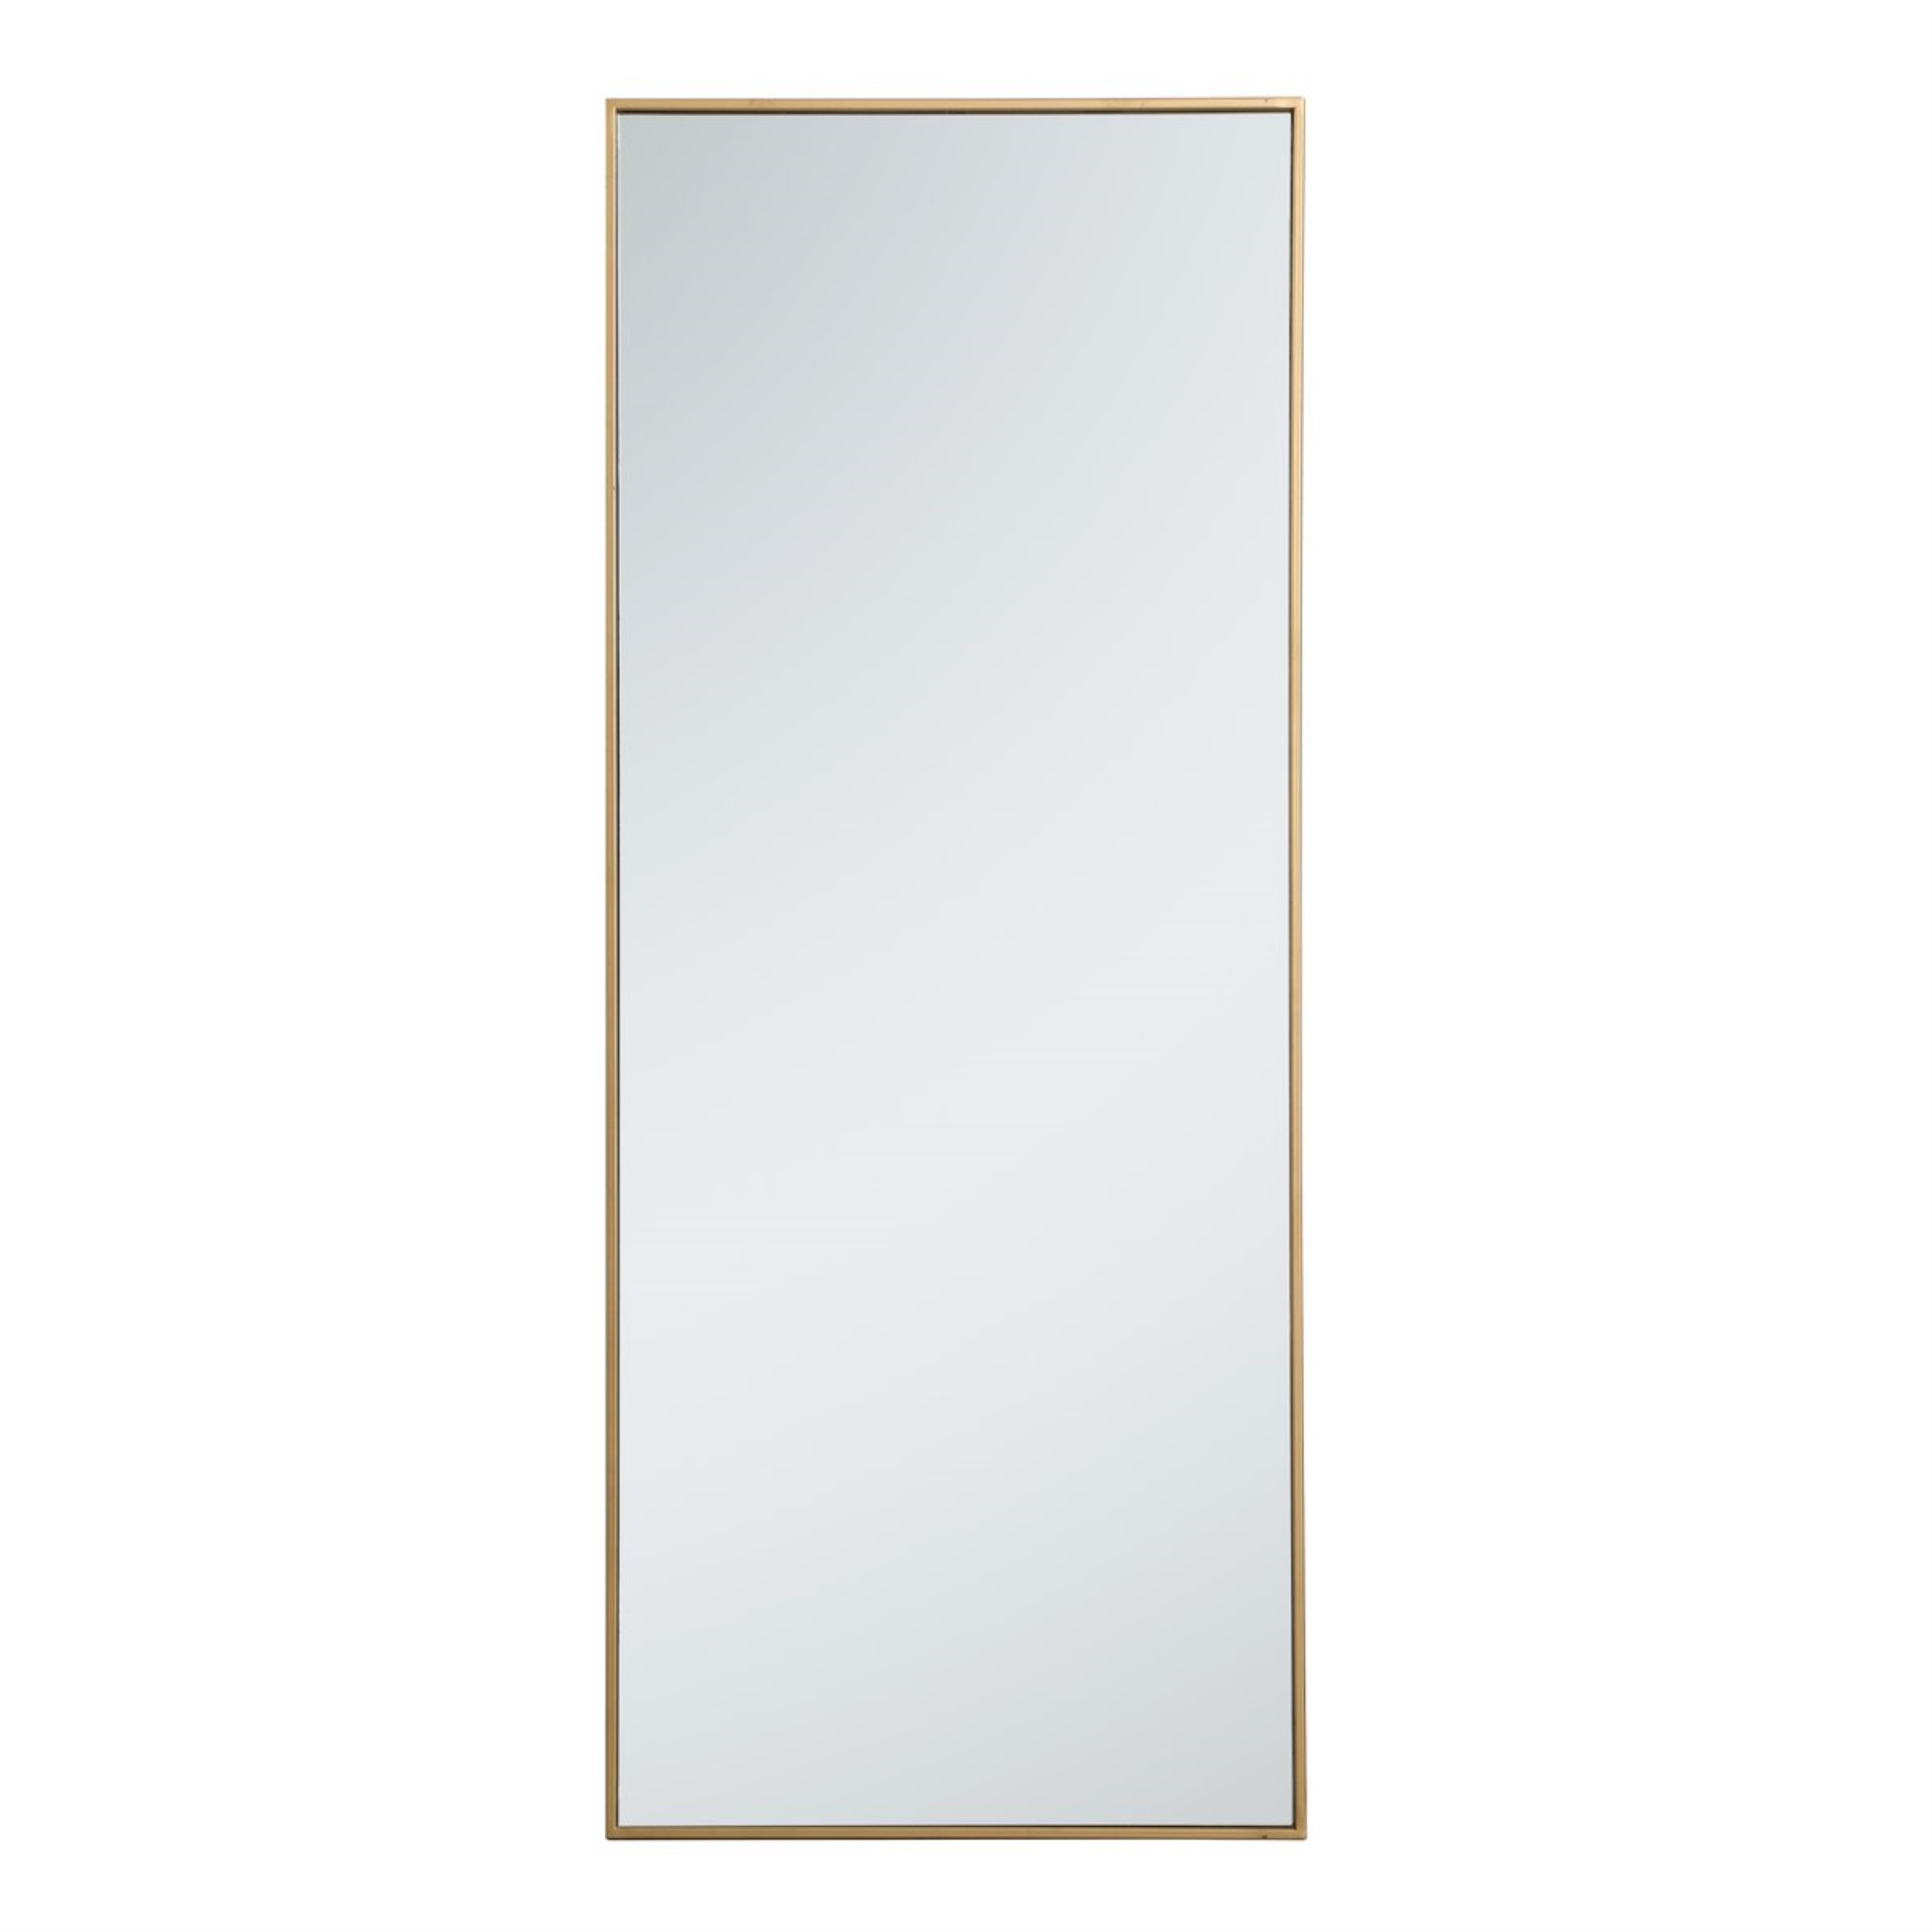 Elegant Decor Metal frame rectangle mirror 24 inch in Brass